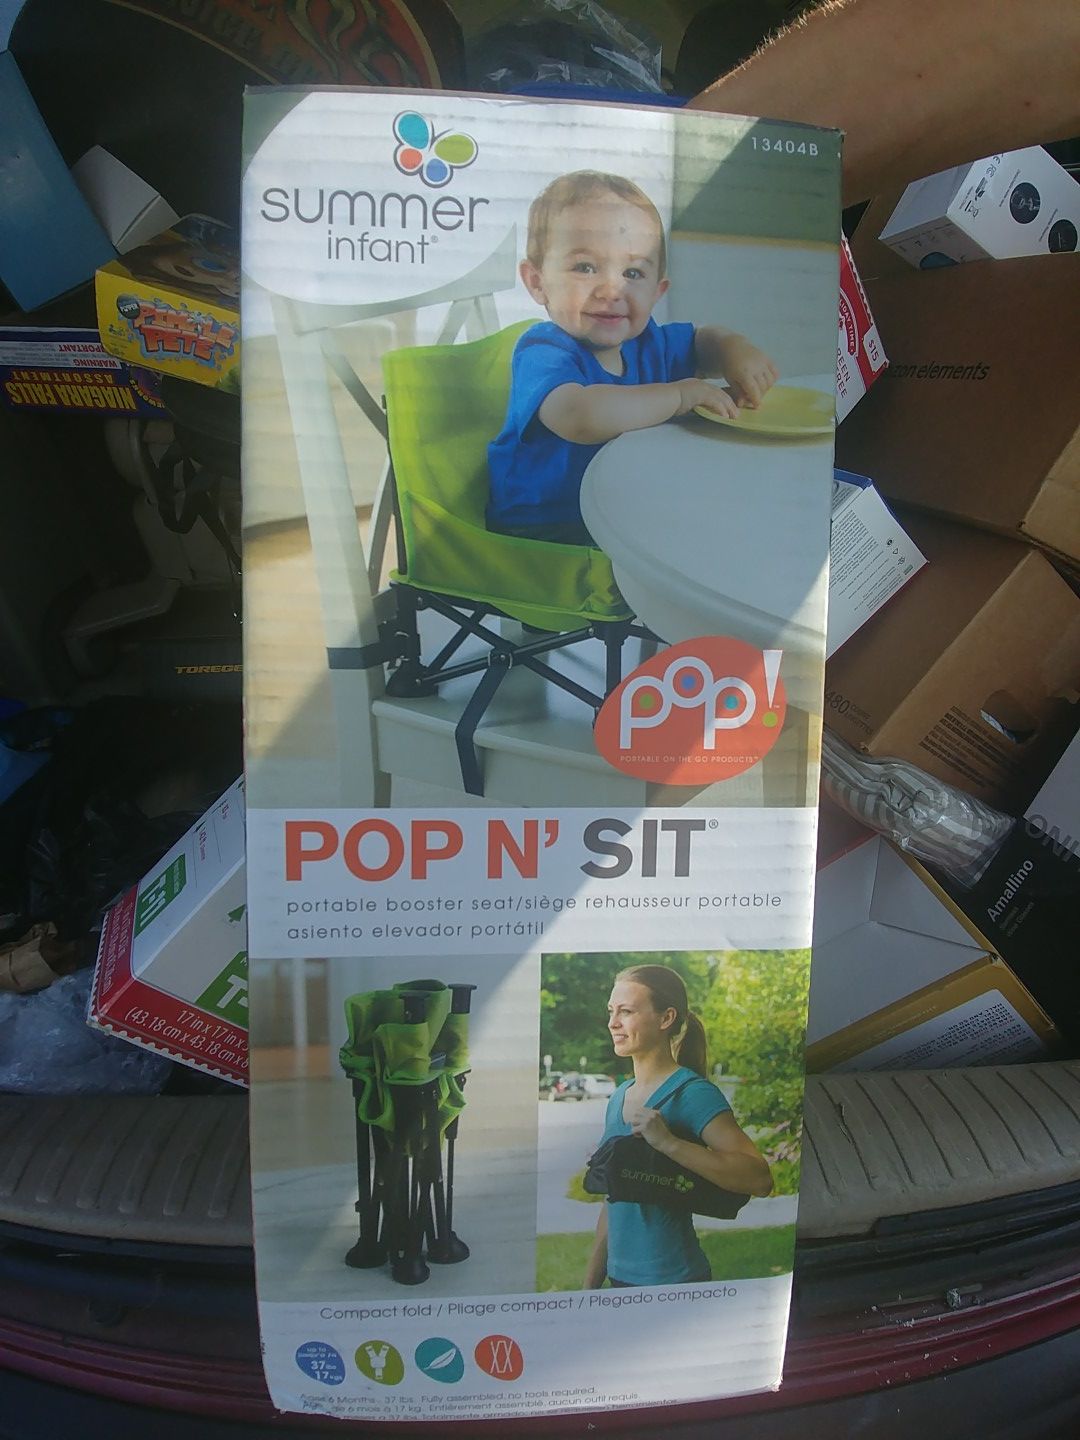 Pop n sit portable booster seat